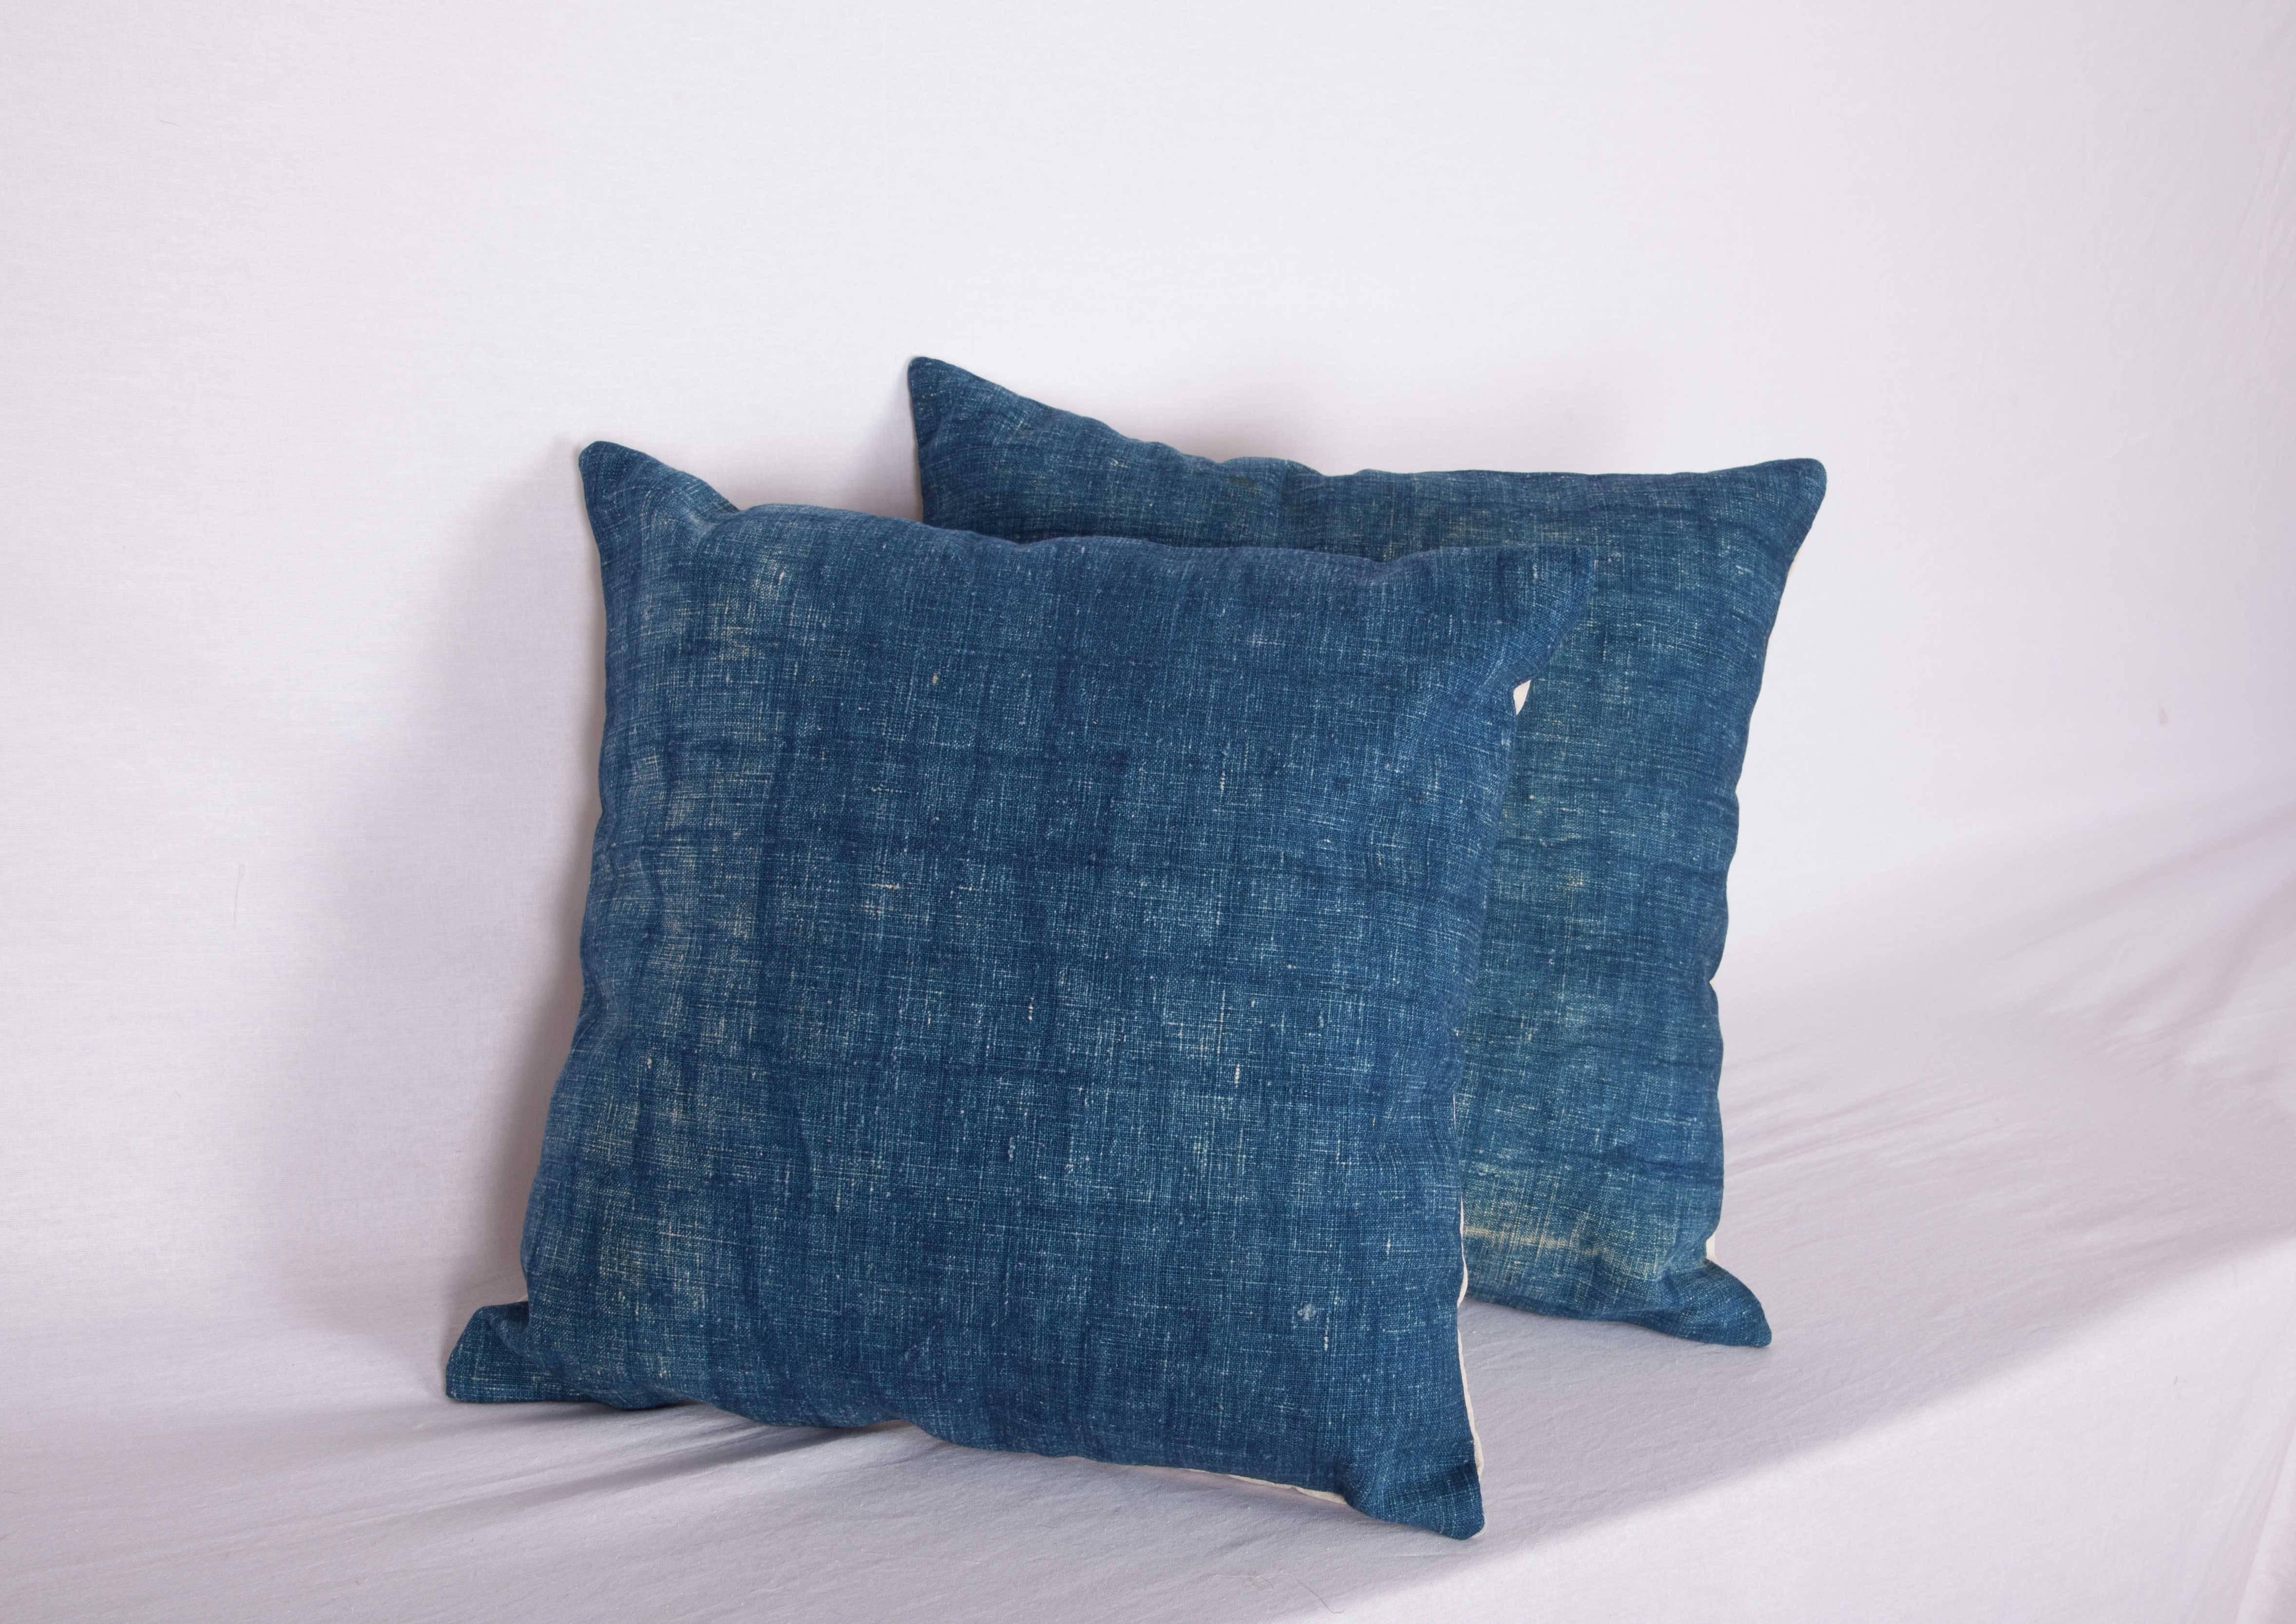 20th Century Pillow Cases Made Out of a Century Old Mazandaran Indigo Blanket Top